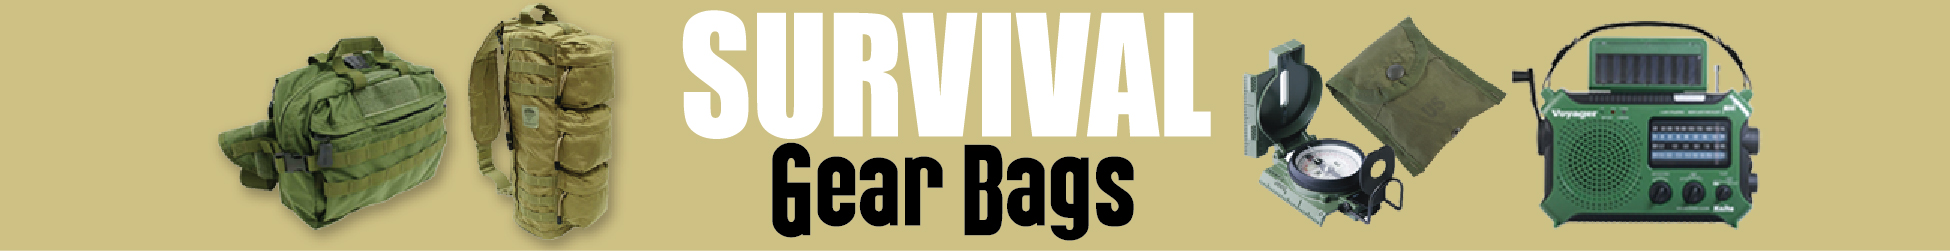 Survival Gear Bags